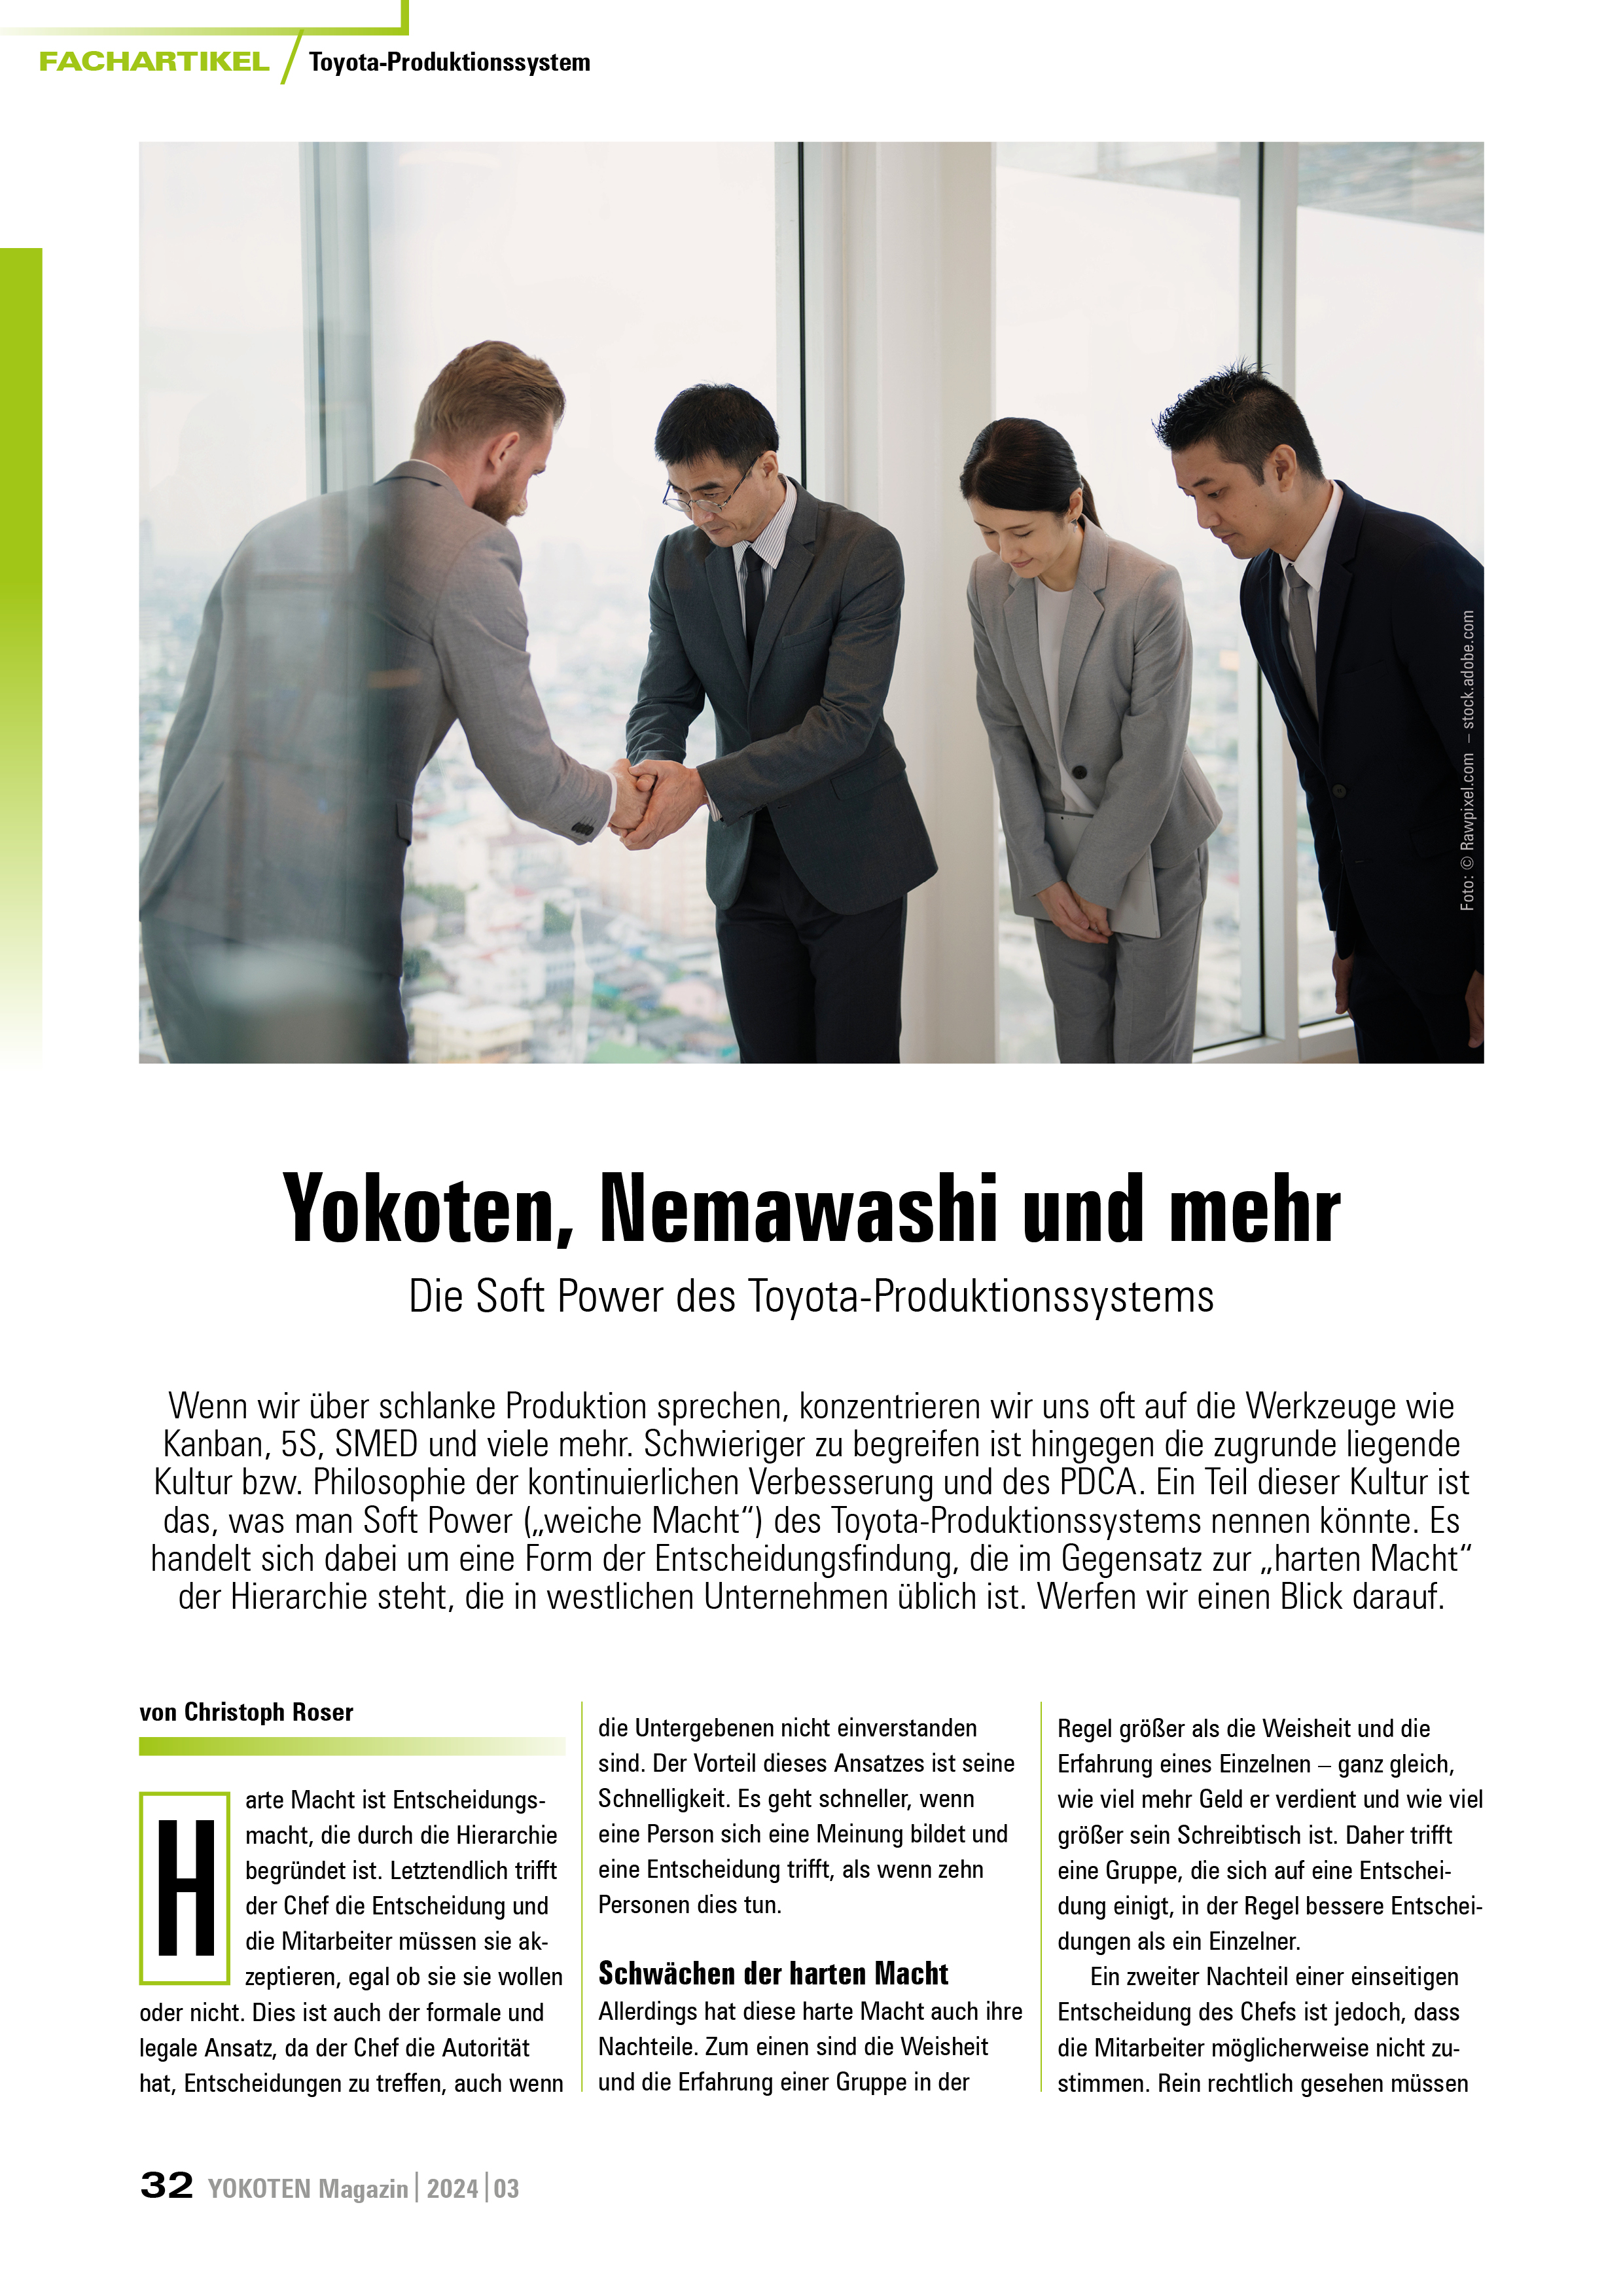 Yokoten, Nemawashi und mehr - Artikel aus Fachmagazin YOKOTEN 2024-03